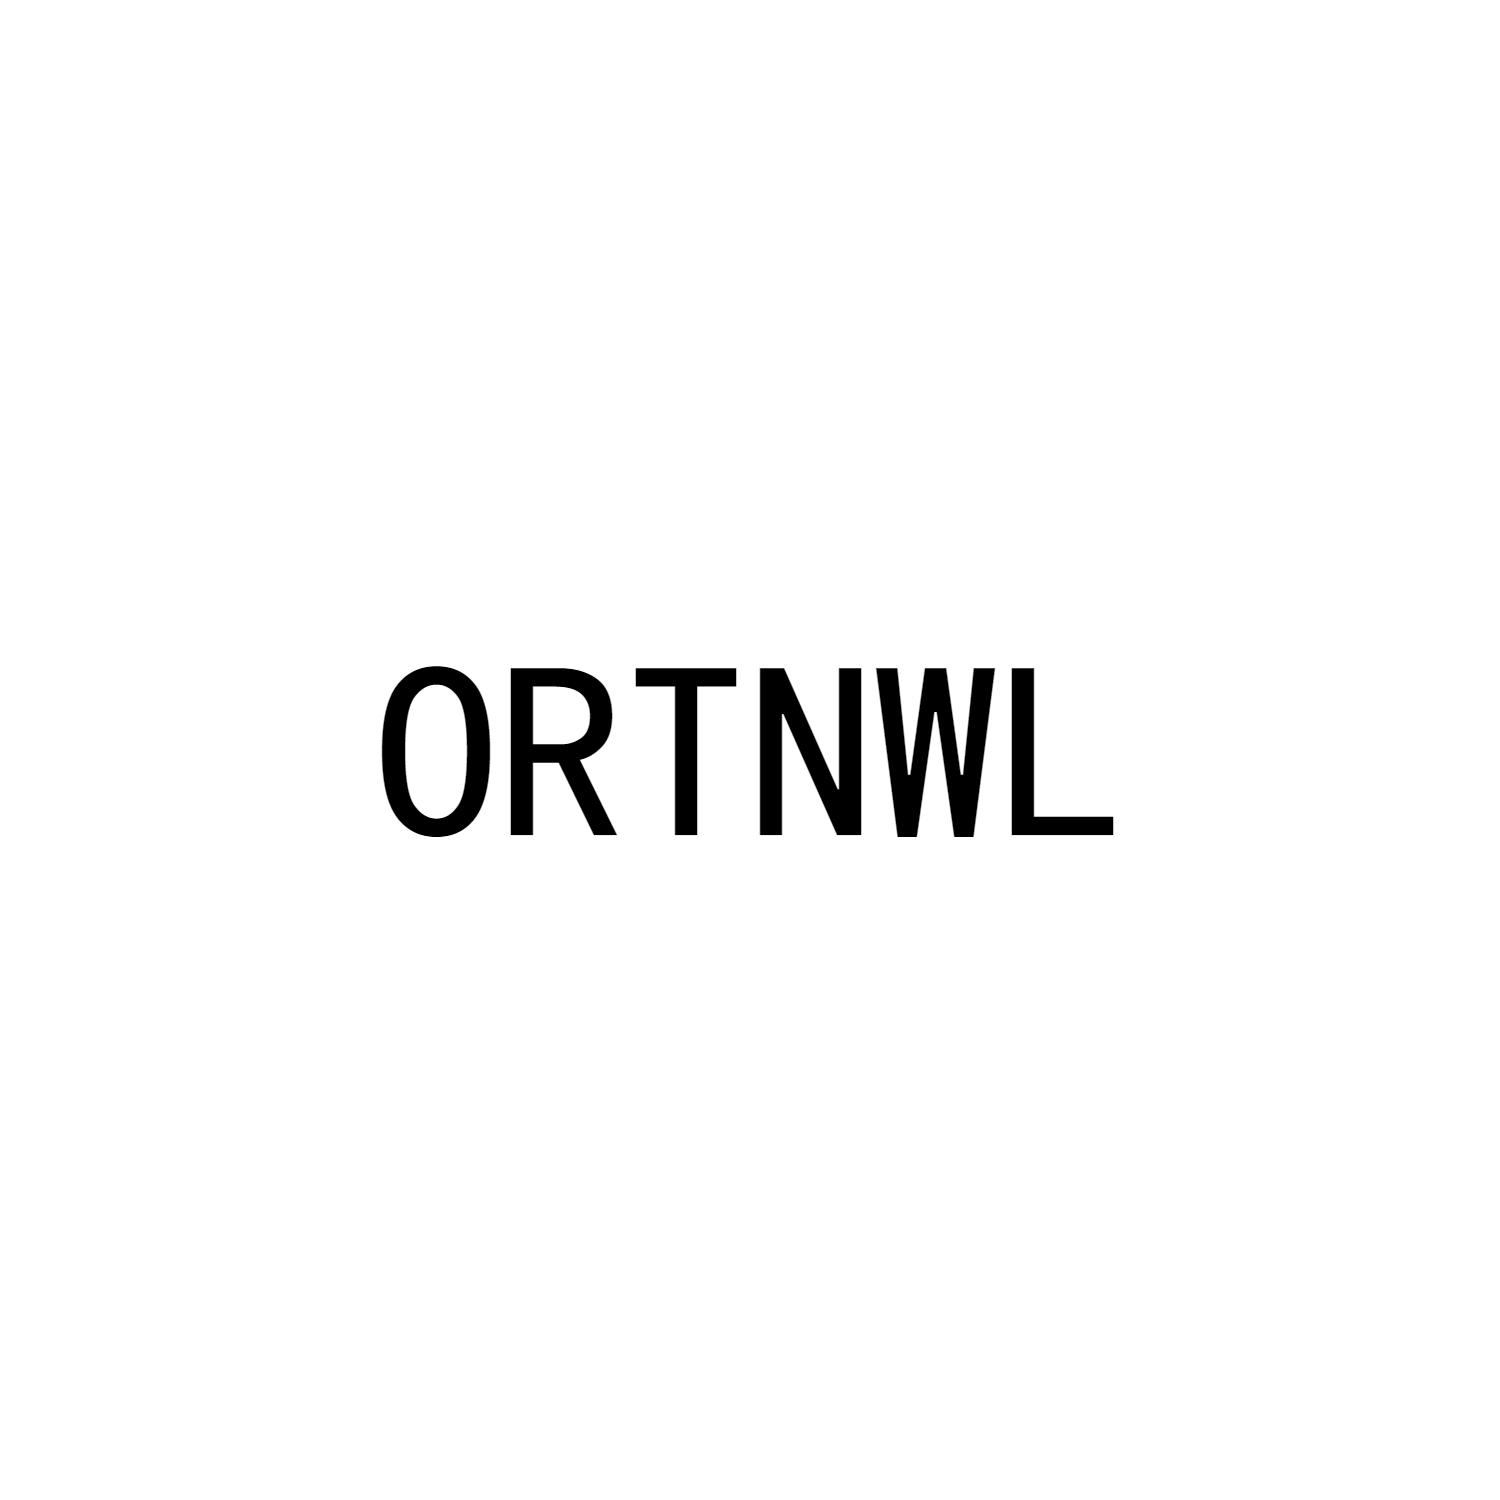 ORTNWL